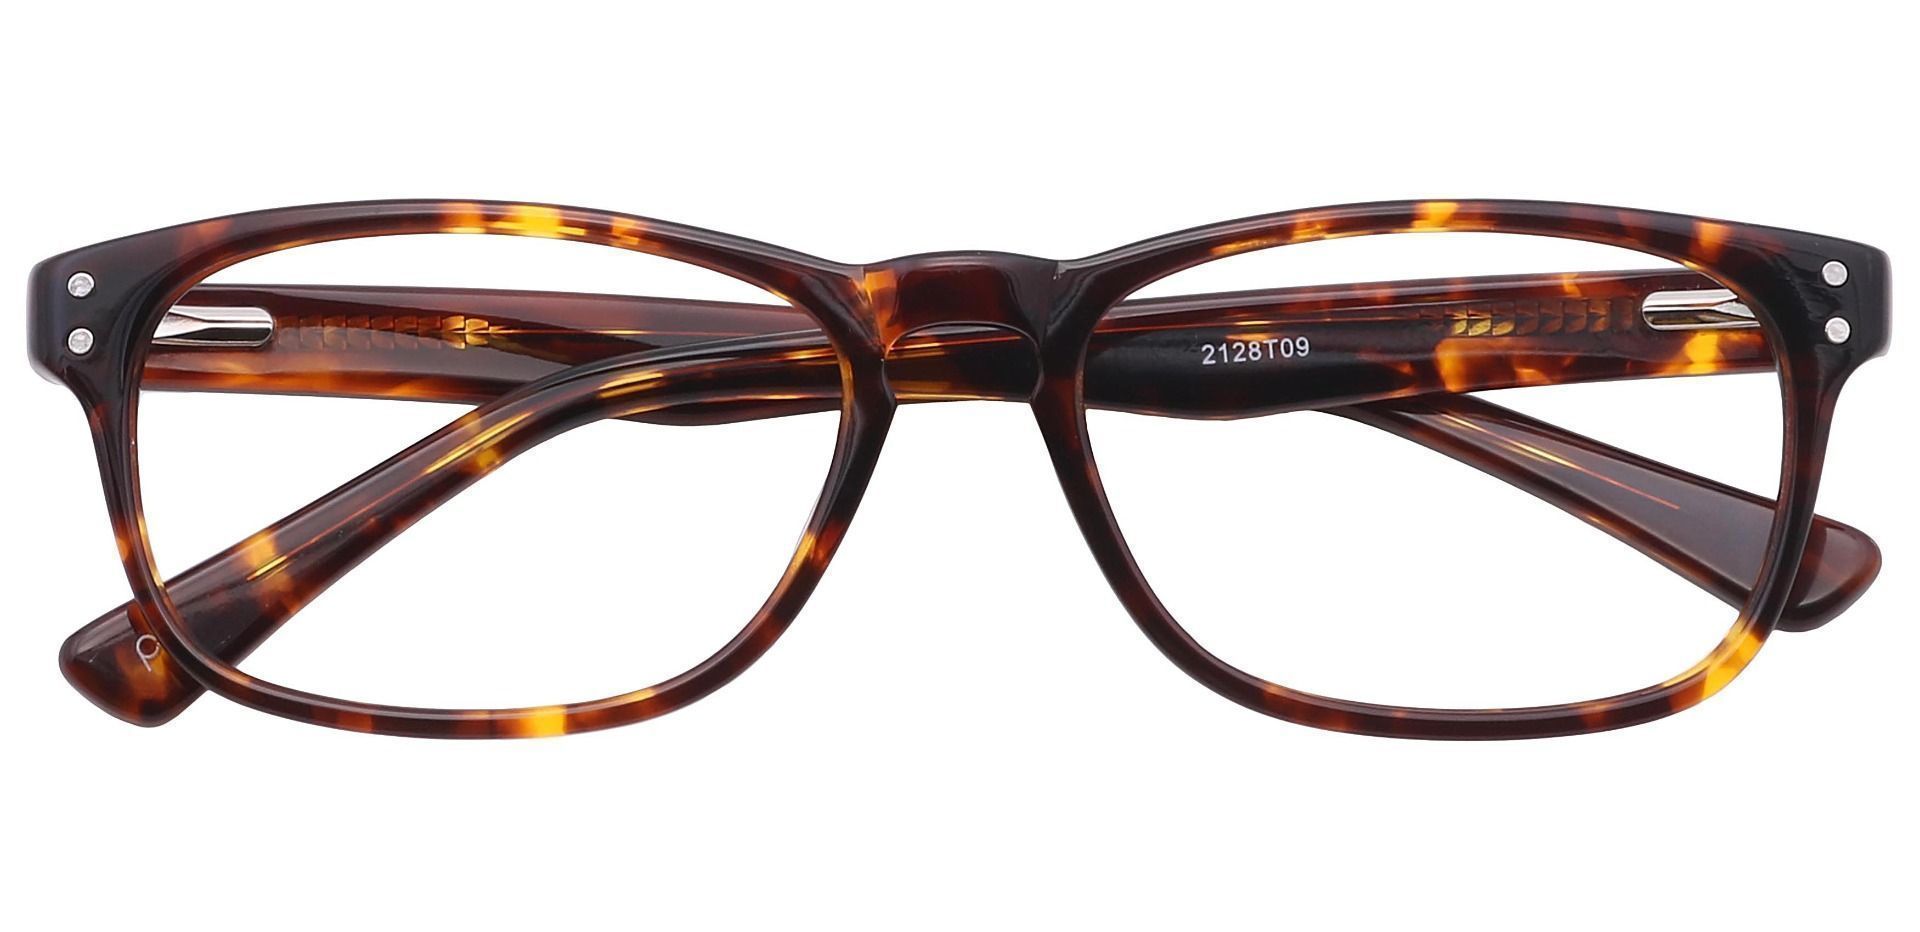 Morris Rectangle Lined Bifocal Glasses - Tortoise